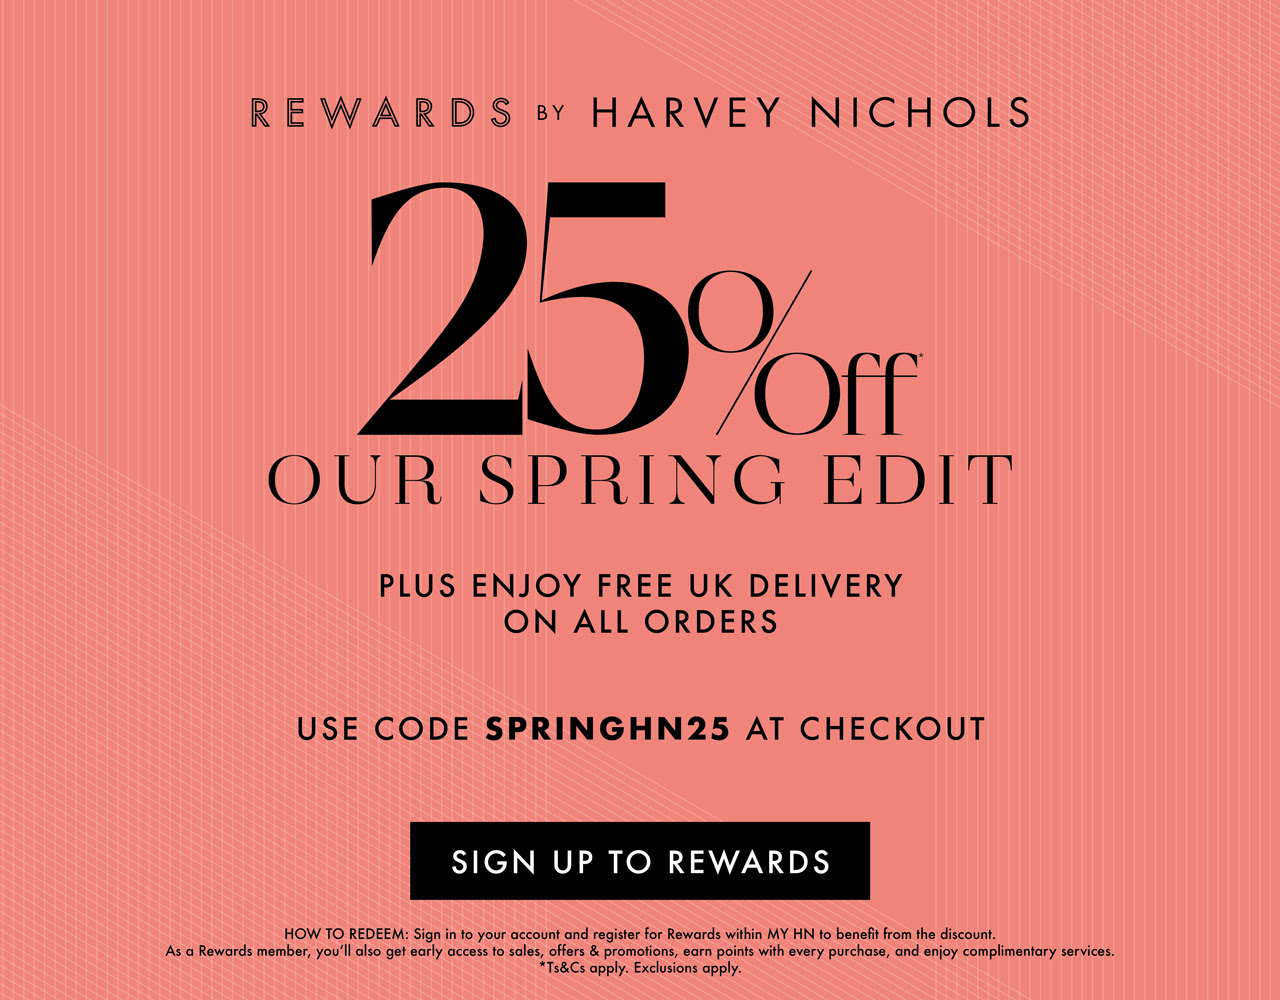 Harvey Nichols - Fancy 25% off our Spring Edit?